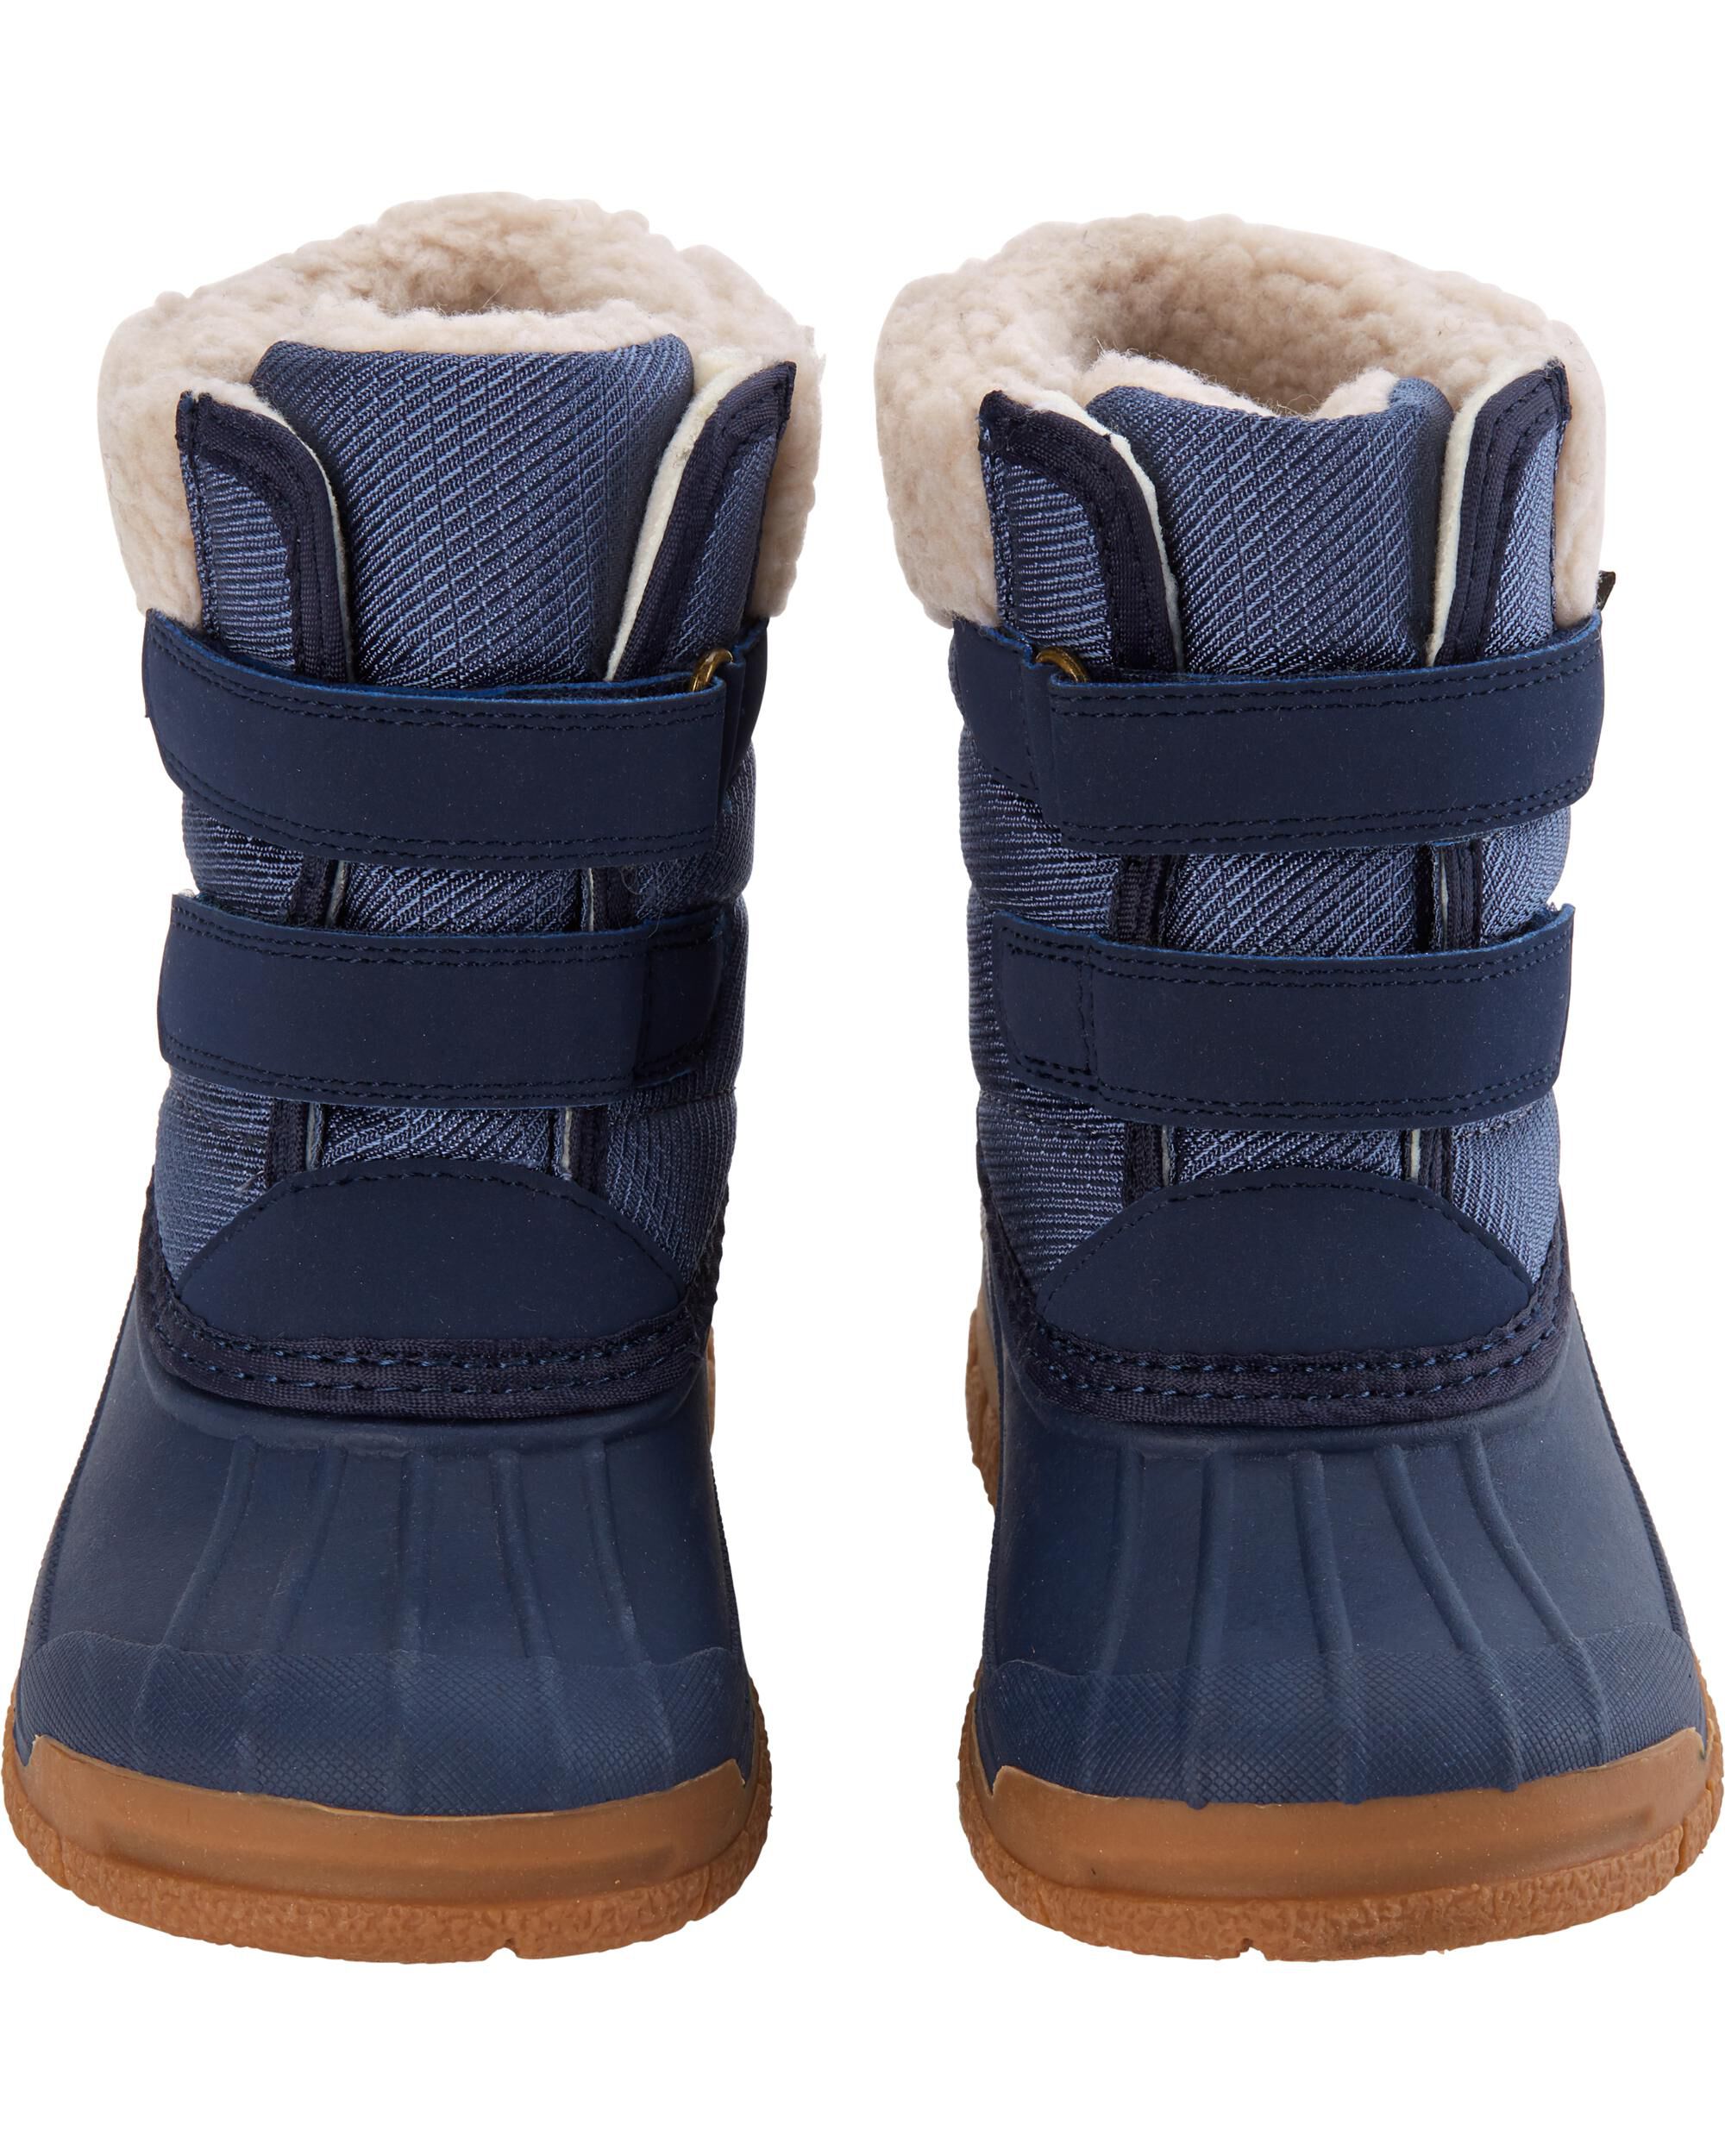 Snow Boots | carters.com